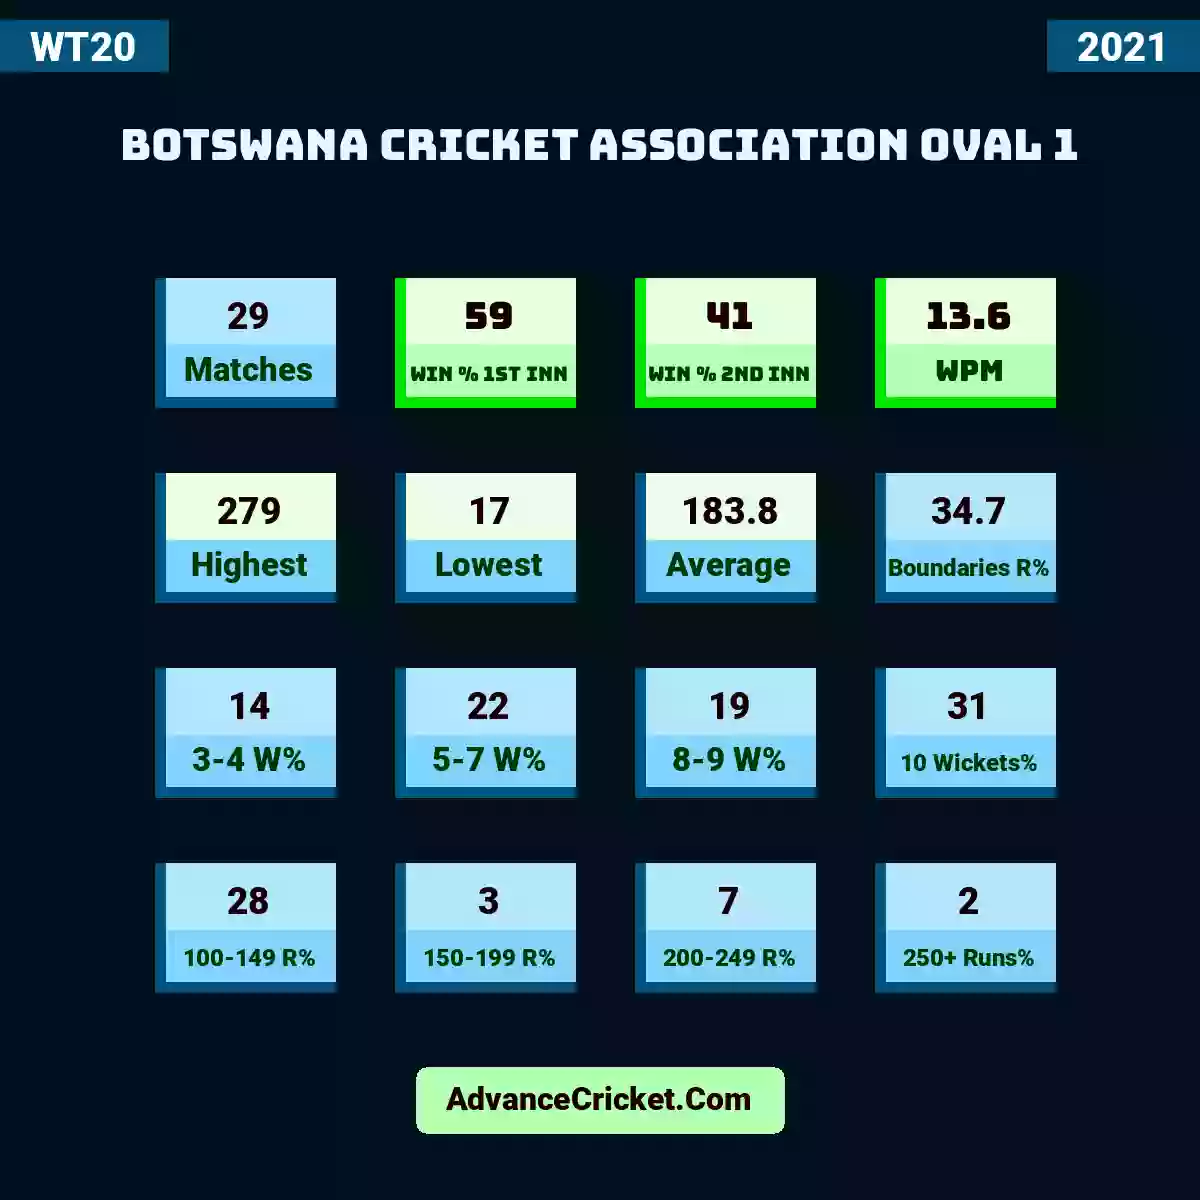 Image showing Botswana Cricket Association Oval 1 with Matches: 29, Win % 1st Inn: 59, Win % 2nd Inn: 41, WPM: 13.6, Highest: 279, Lowest: 17, Average: 183.8, Boundaries R%: 34.7, 3-4 W%: 14, 5-7 W%: 22, 8-9 W%: 19, 10 Wickets%: 31, 100-149 R%: 28, 150-199 R%: 3, 200-249 R%: 7, 250+ Runs%: 2.